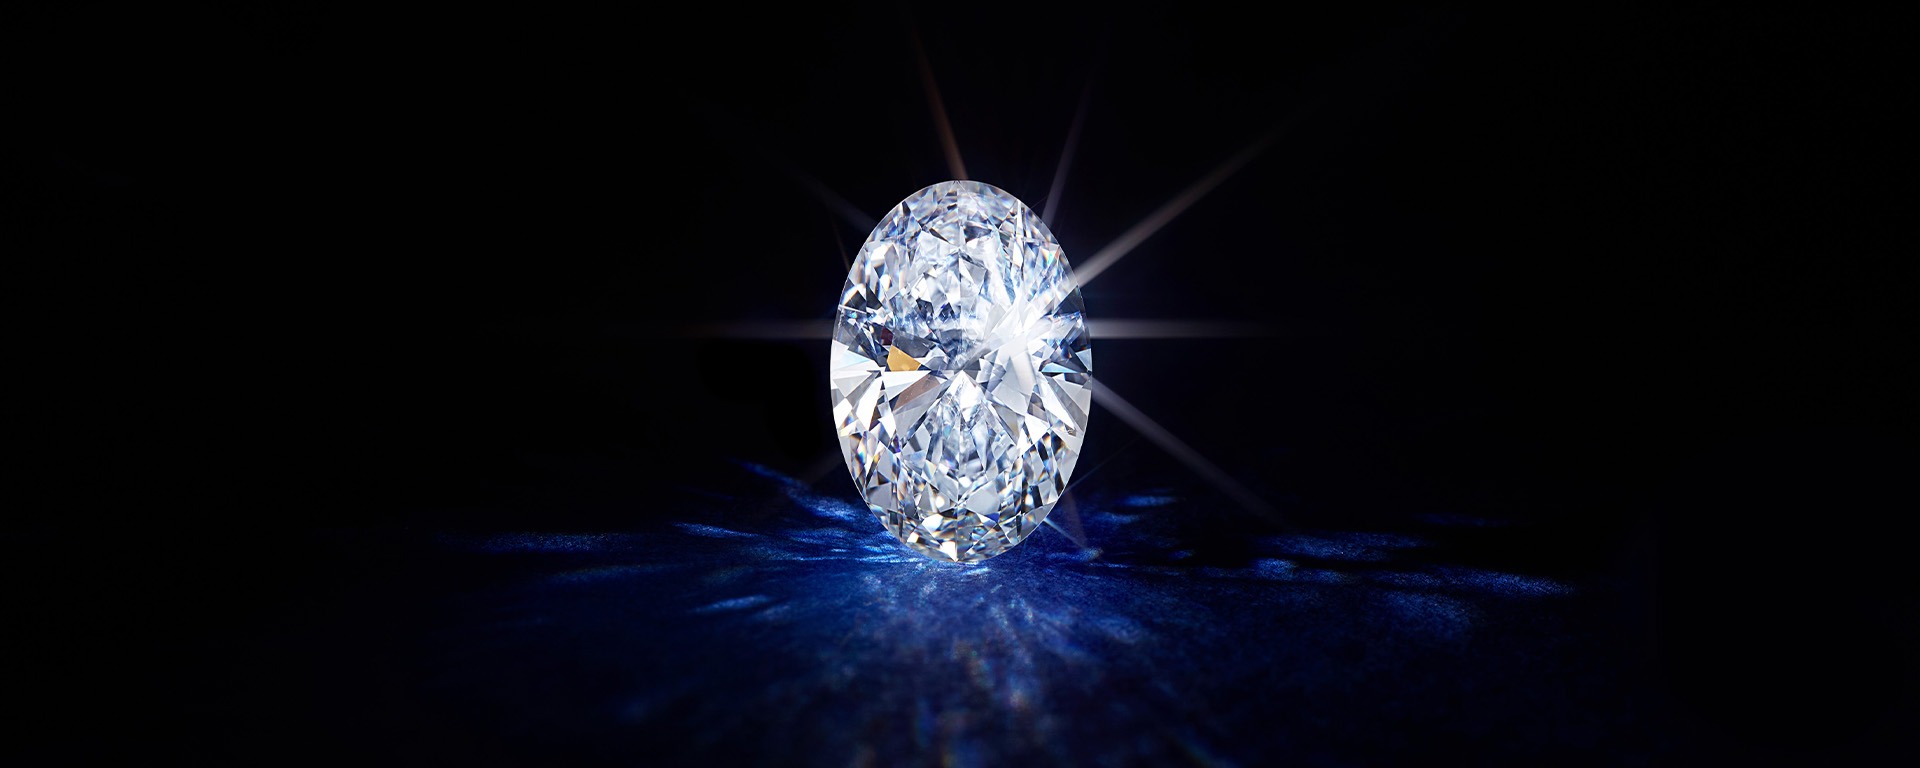 diamond clarity 4Cs of diamonds